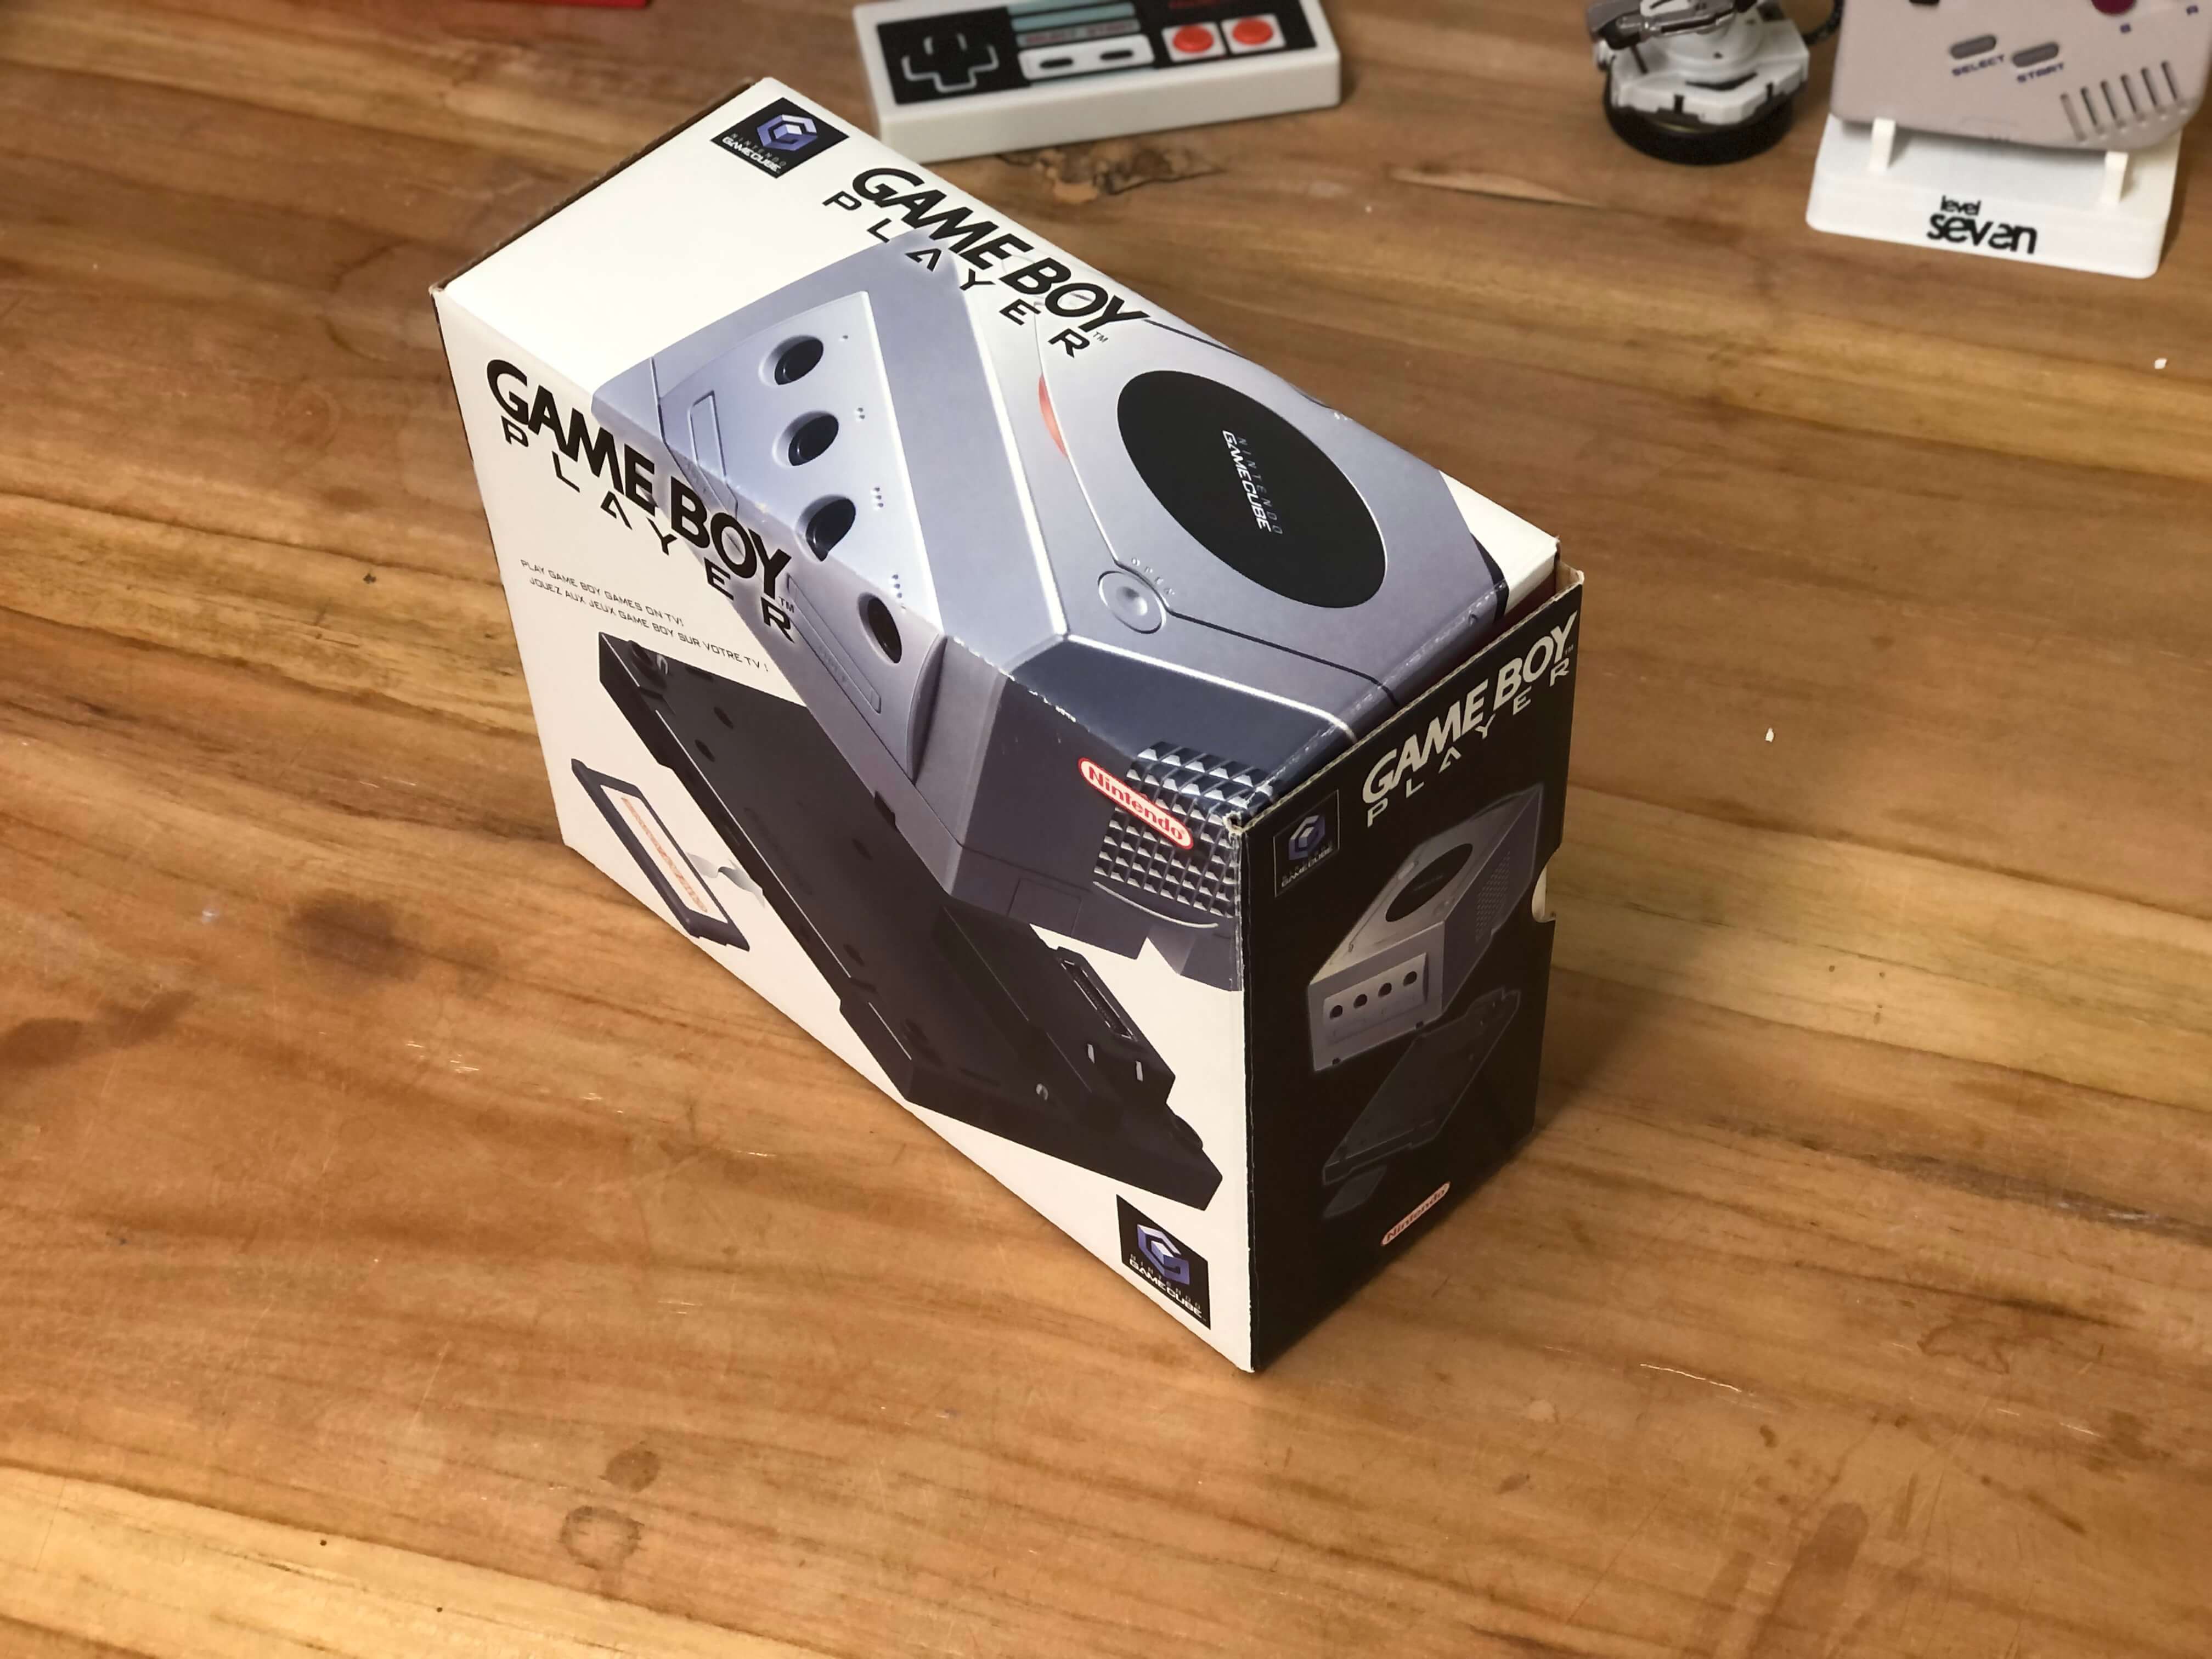 Nintendo Gamecube Gameboy Player [With Disc] [Complete] Kopen | Gamecube Hardware